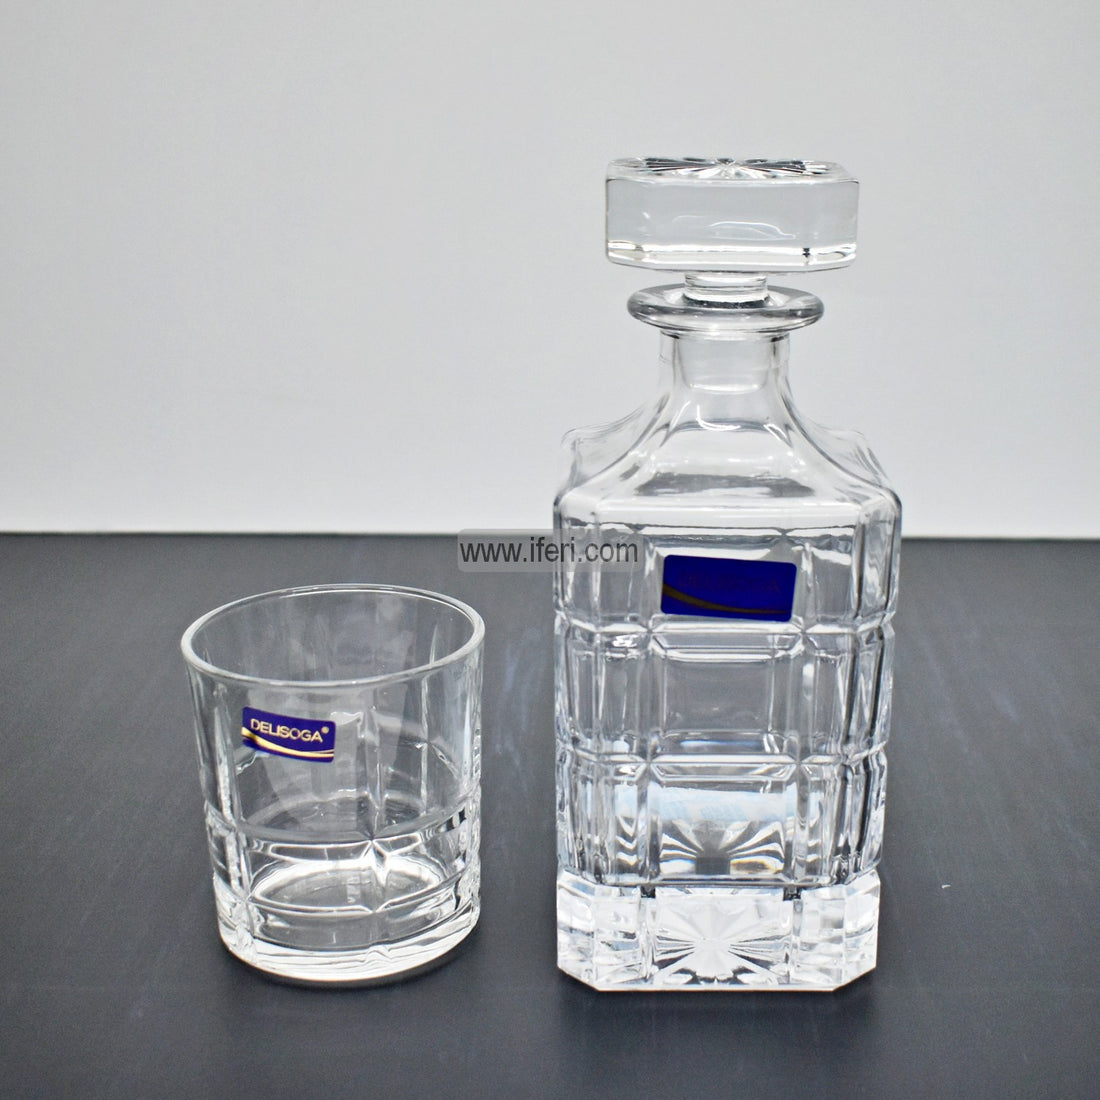 Buy Crystal Glass Decanter Set Online Through iferi.com from Bangladesh